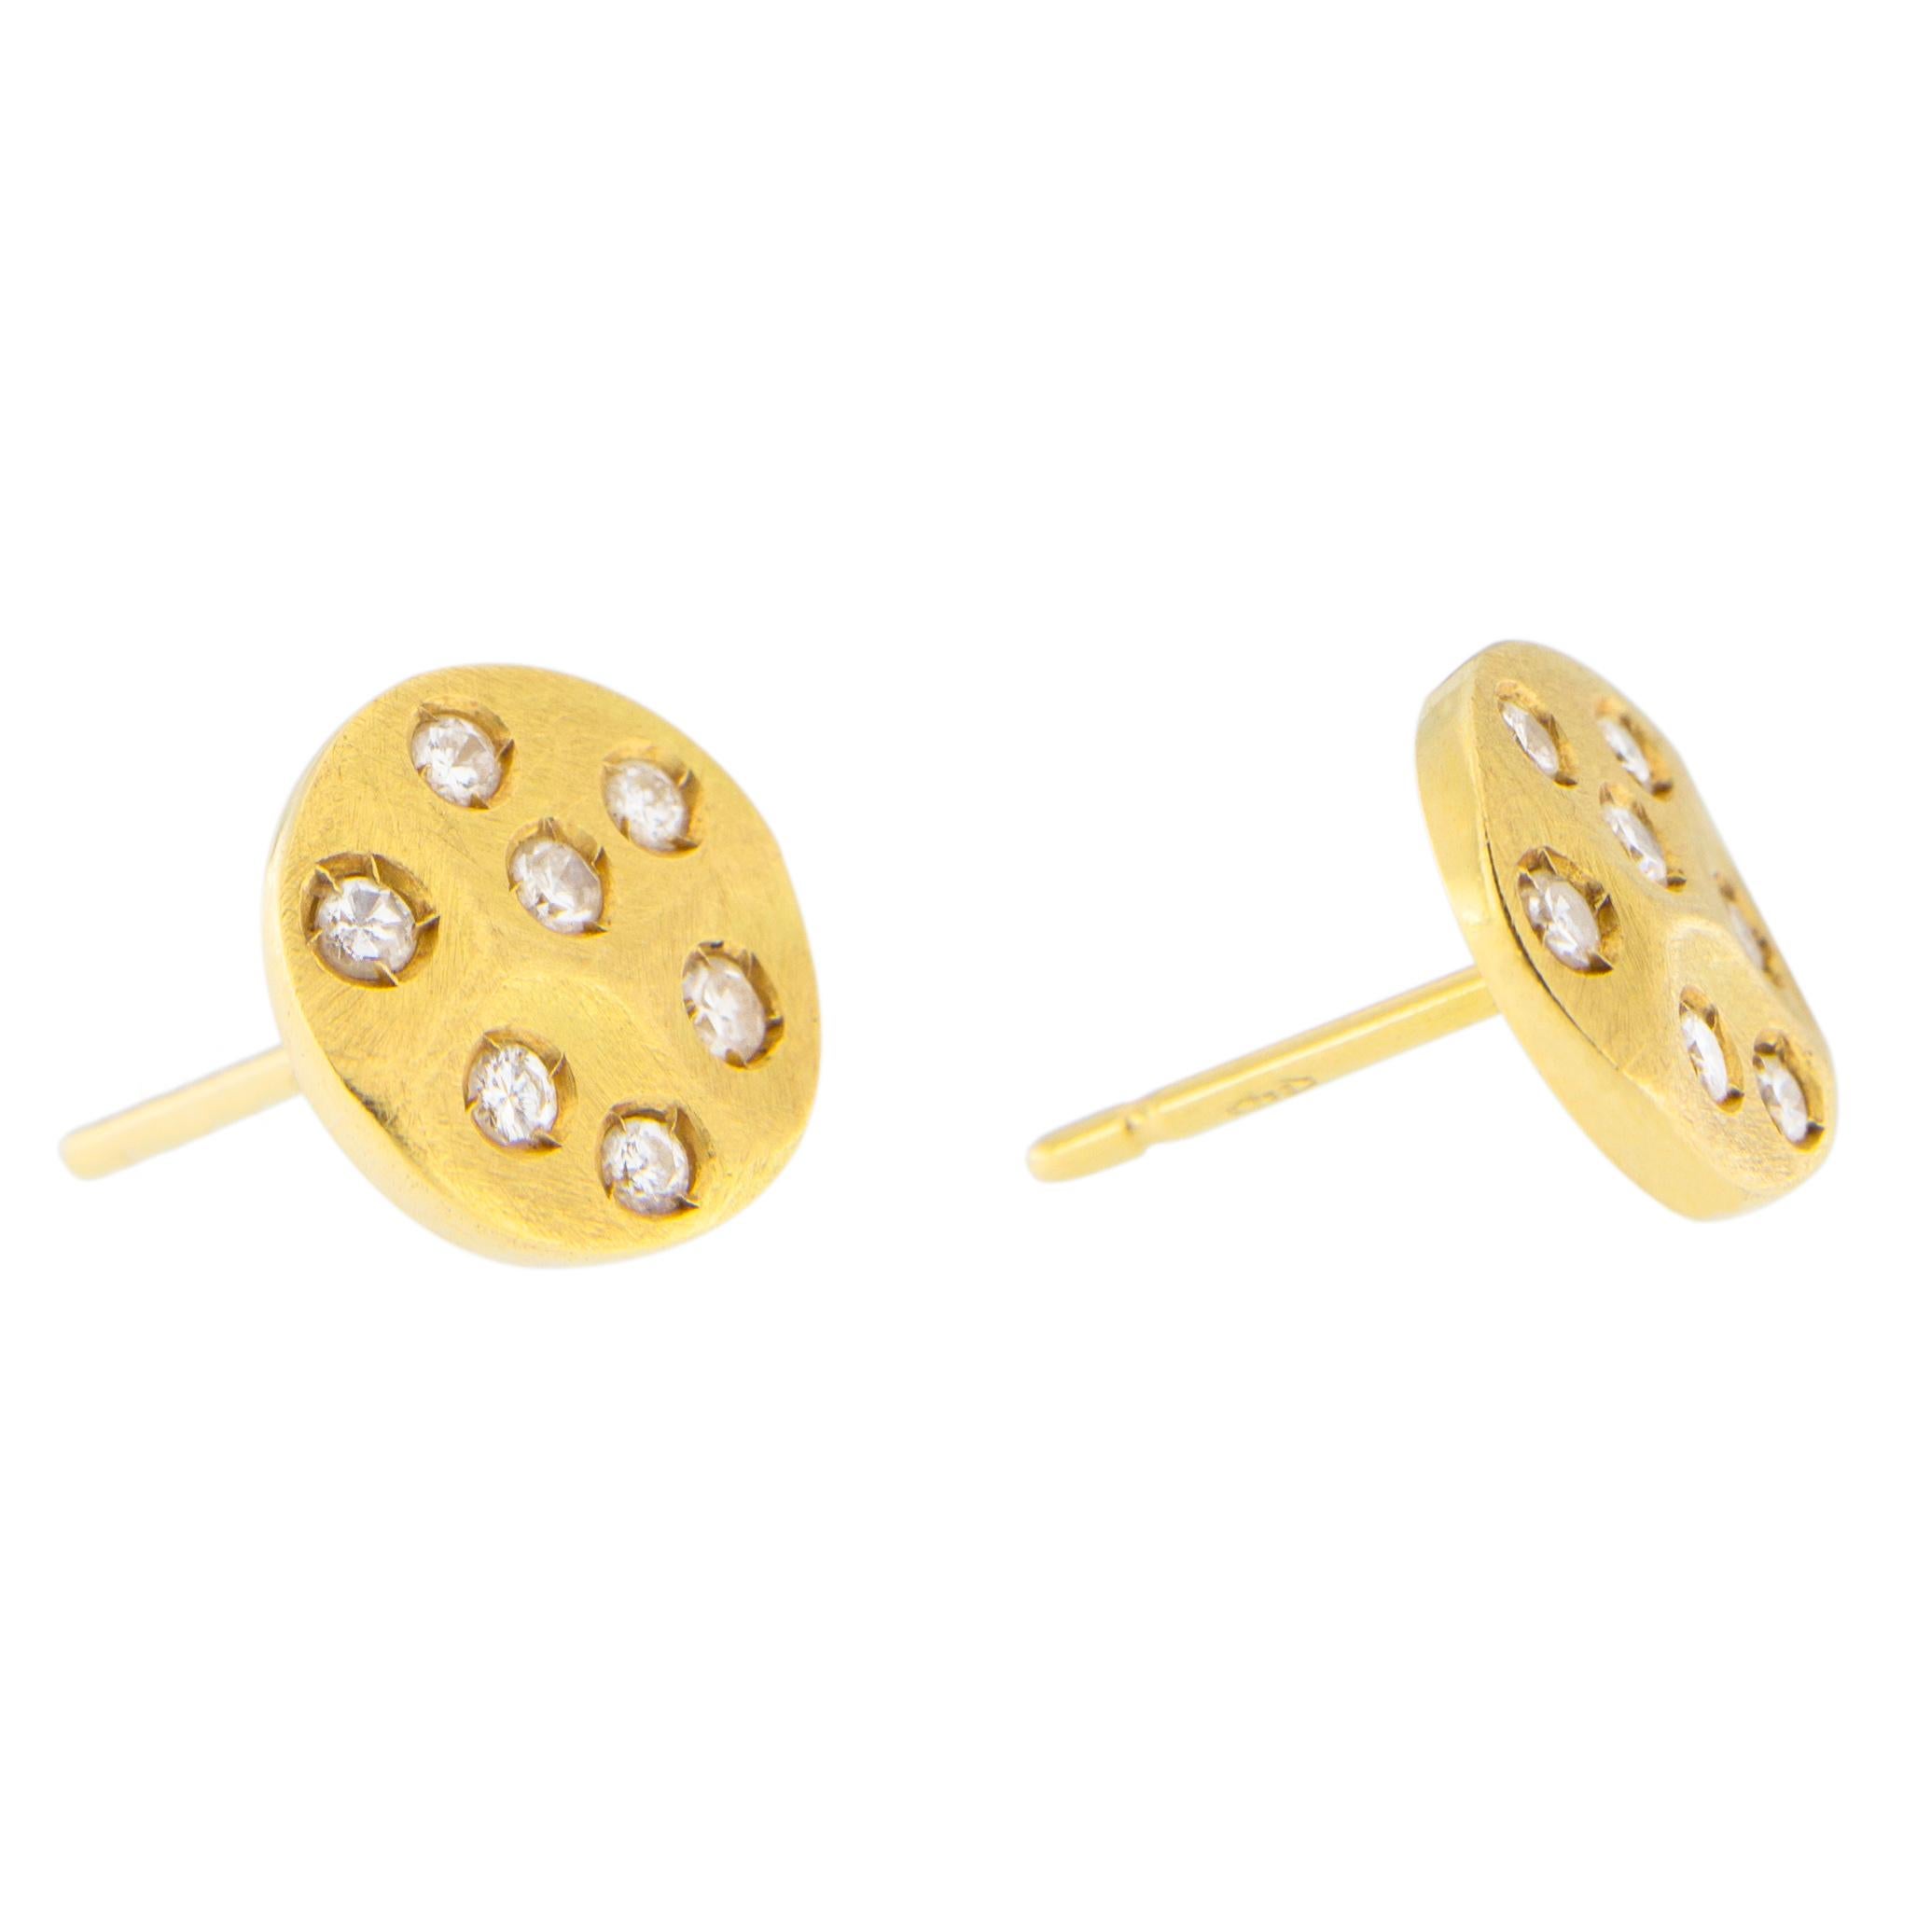 Round Cut Jona White Diamond 18 Karat Yellow Gold Stud Earrings